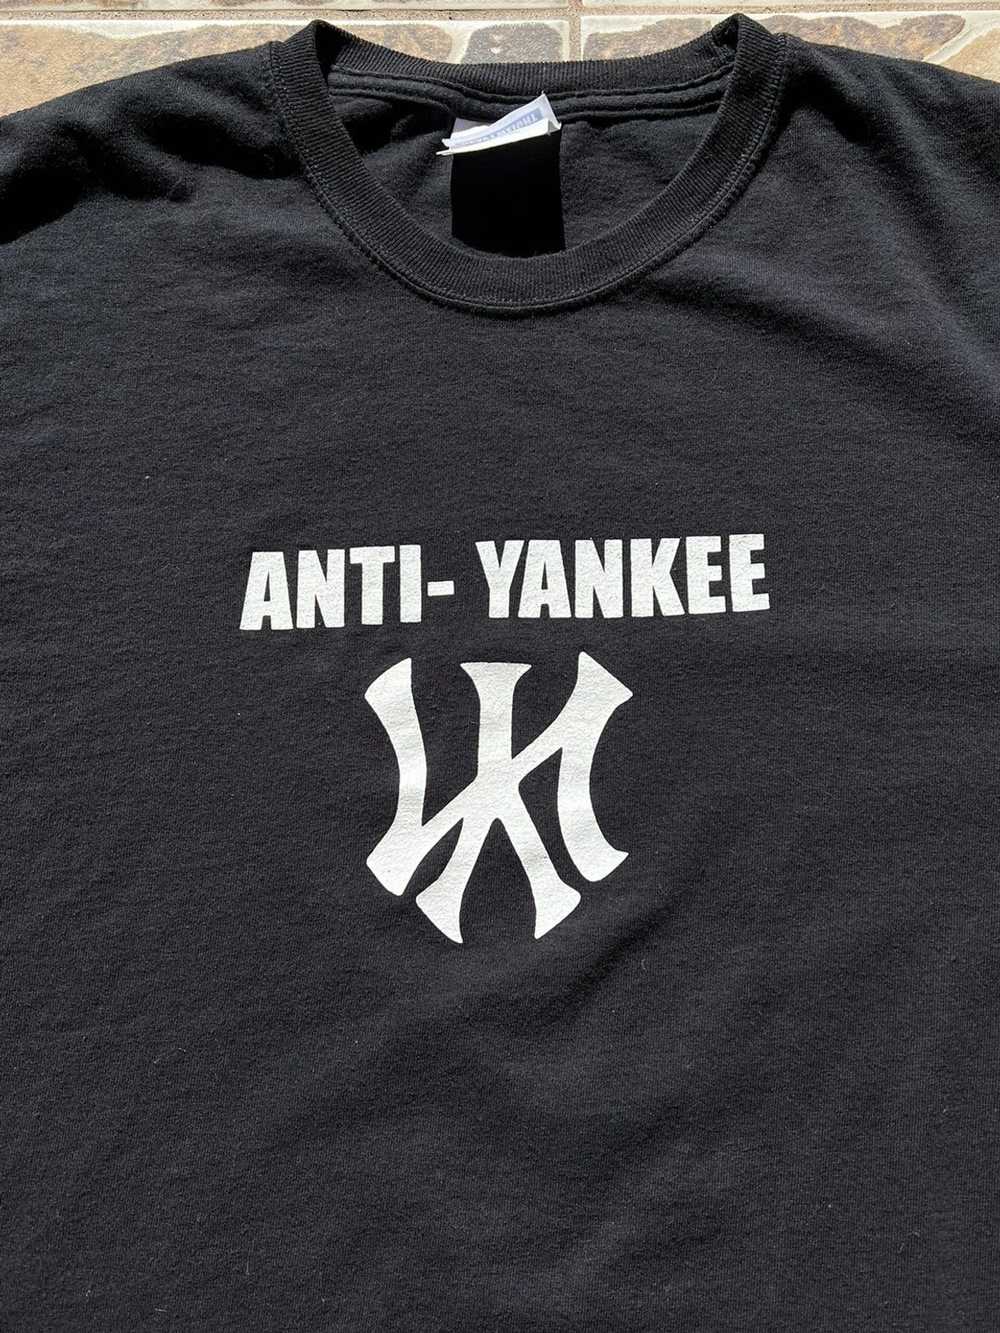 New York Yankees forever not just when we win 2023 signatures shirt -  Guineashirt Premium ™ LLC